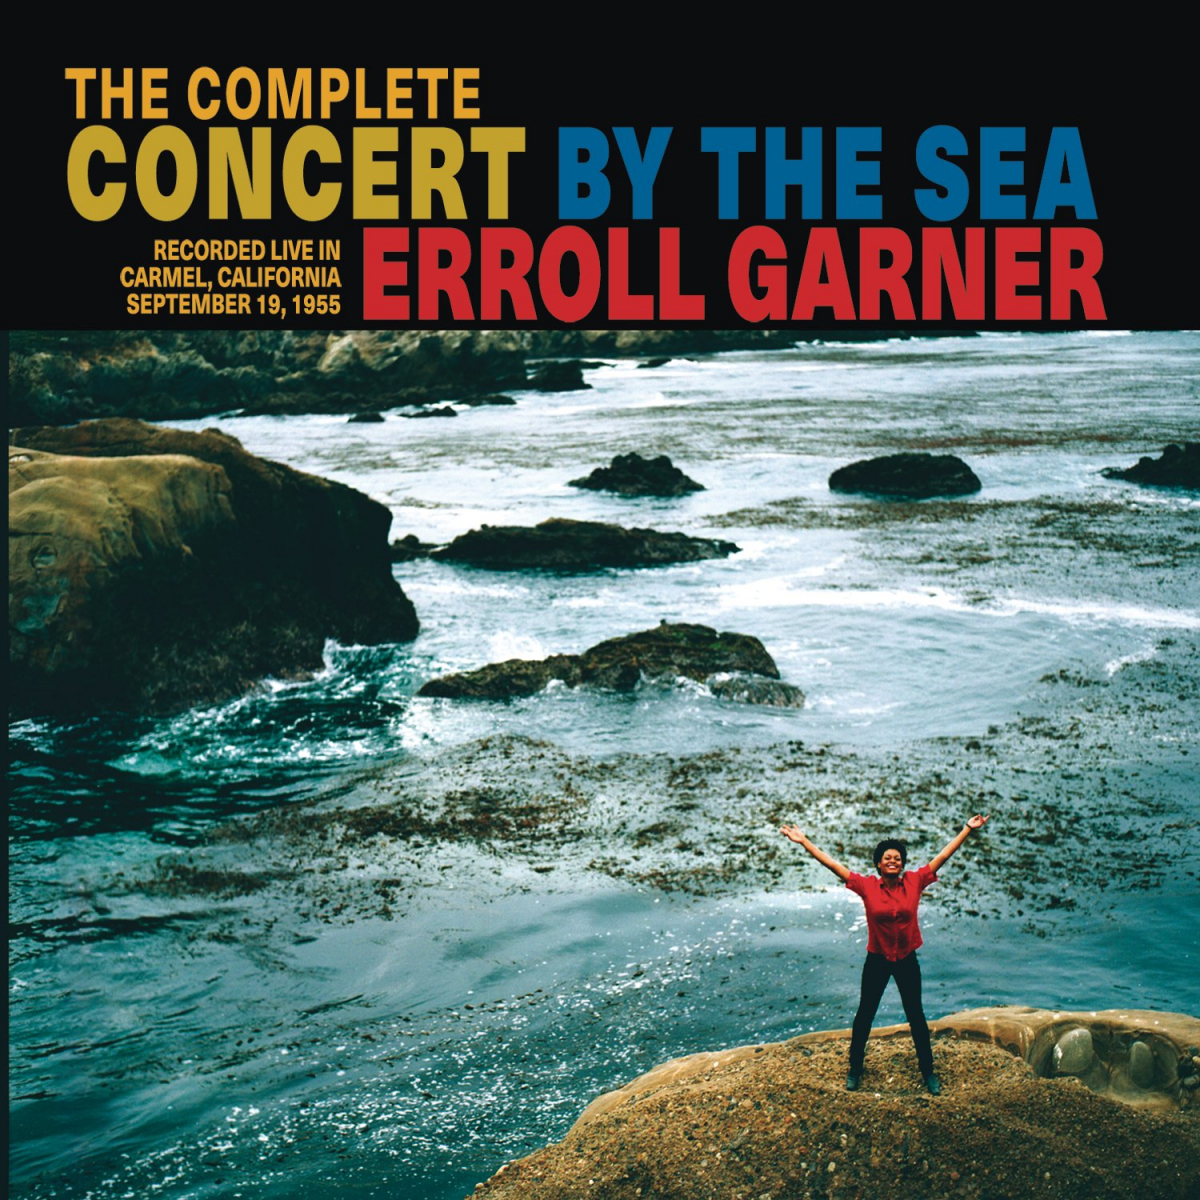 zMusique2 Errol Garner Concert by the Sea.jpg